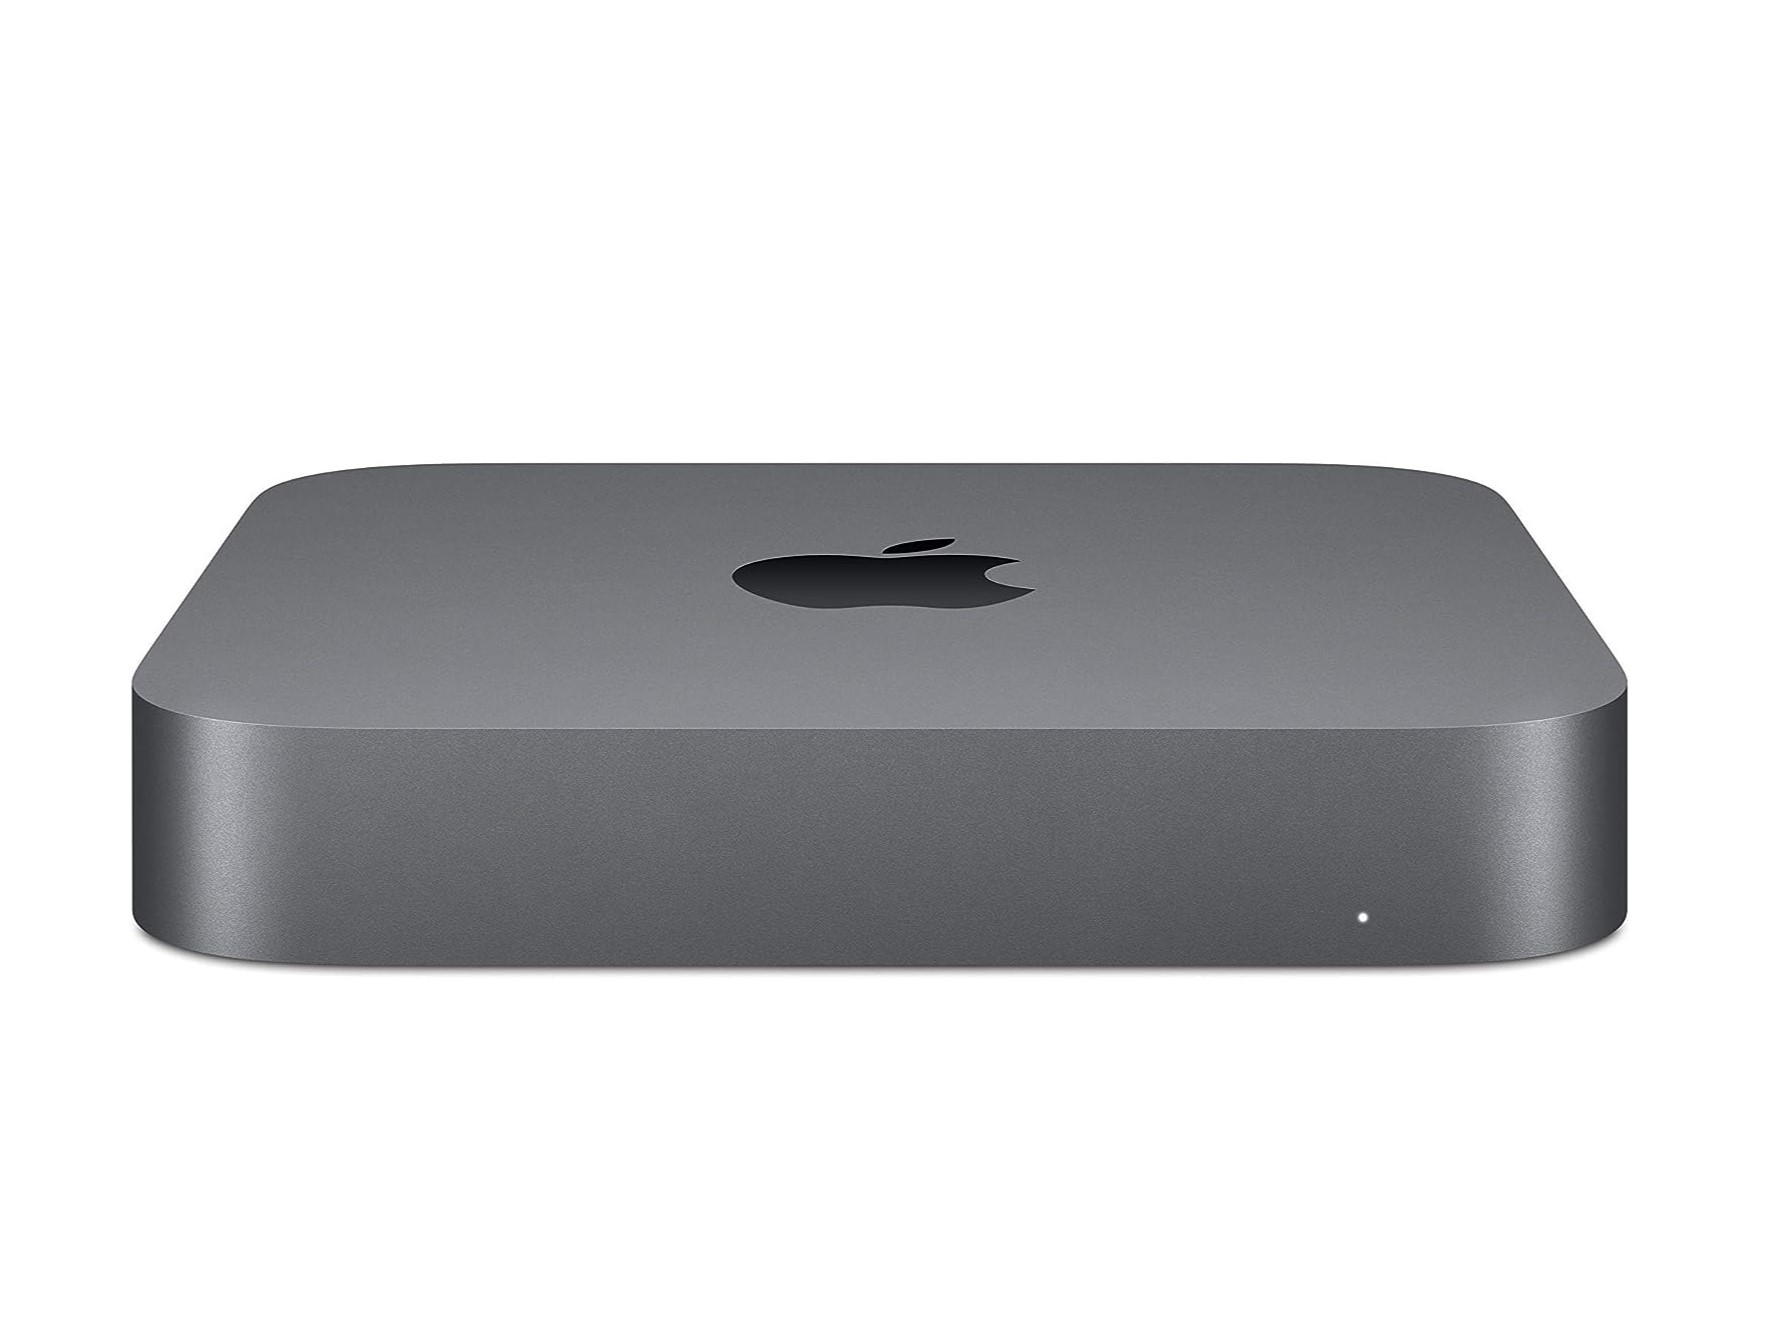 Imagen del producto Apple Mac Mini 2018 en gris.